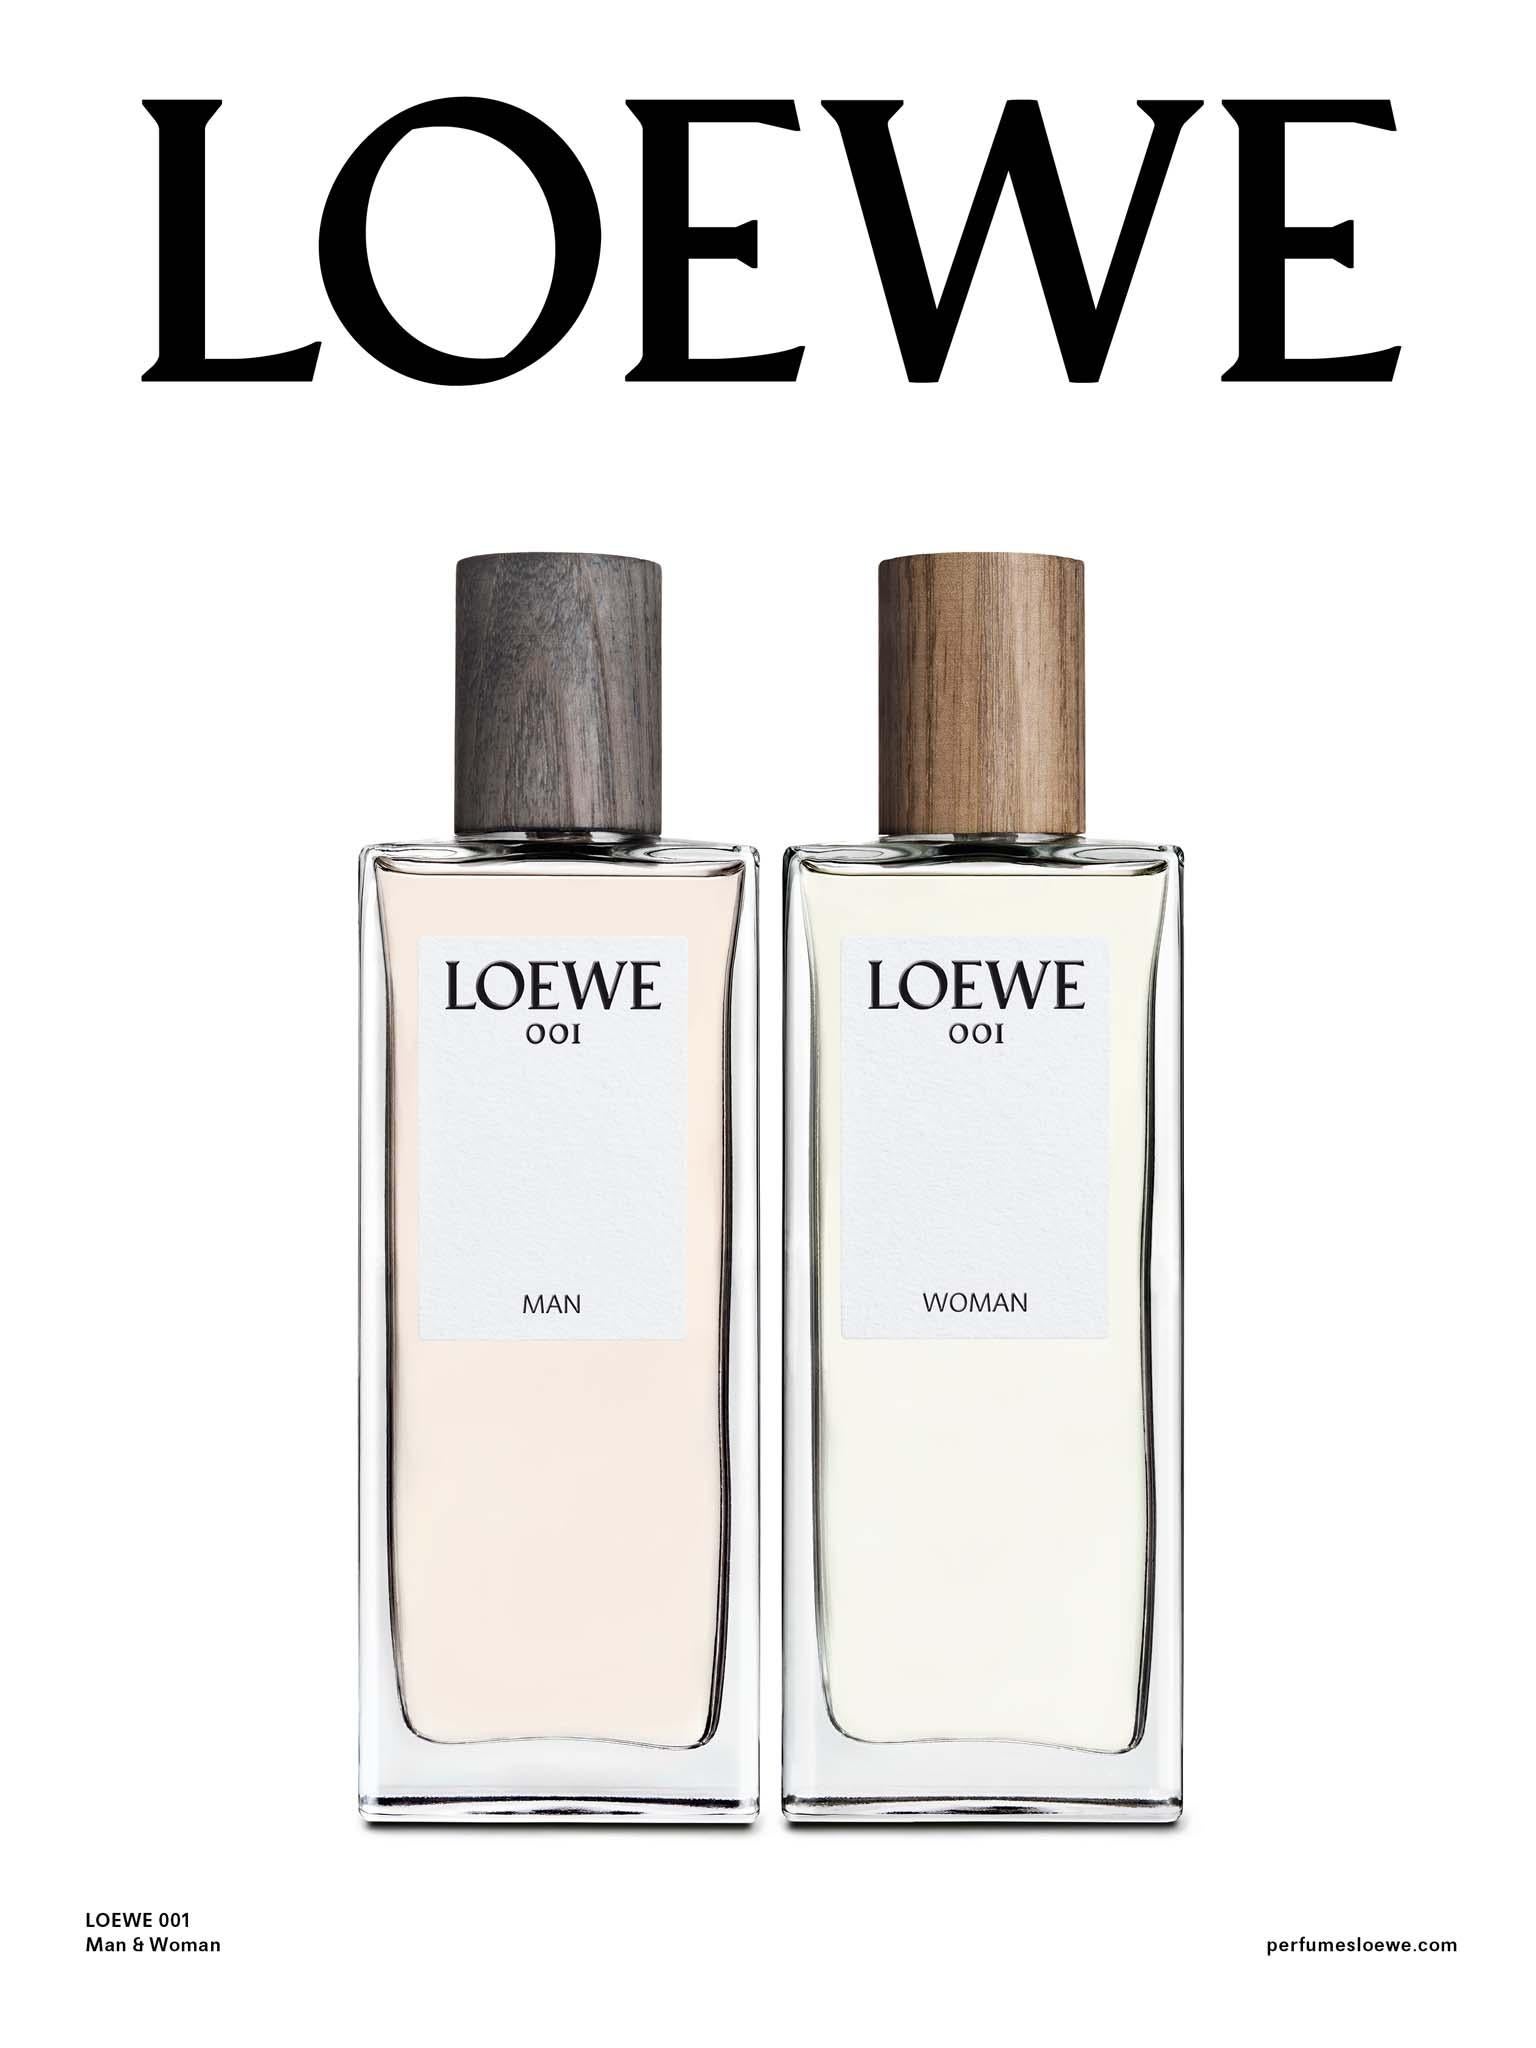 Loewe 001 Woman 50ml ?61 harrods.com